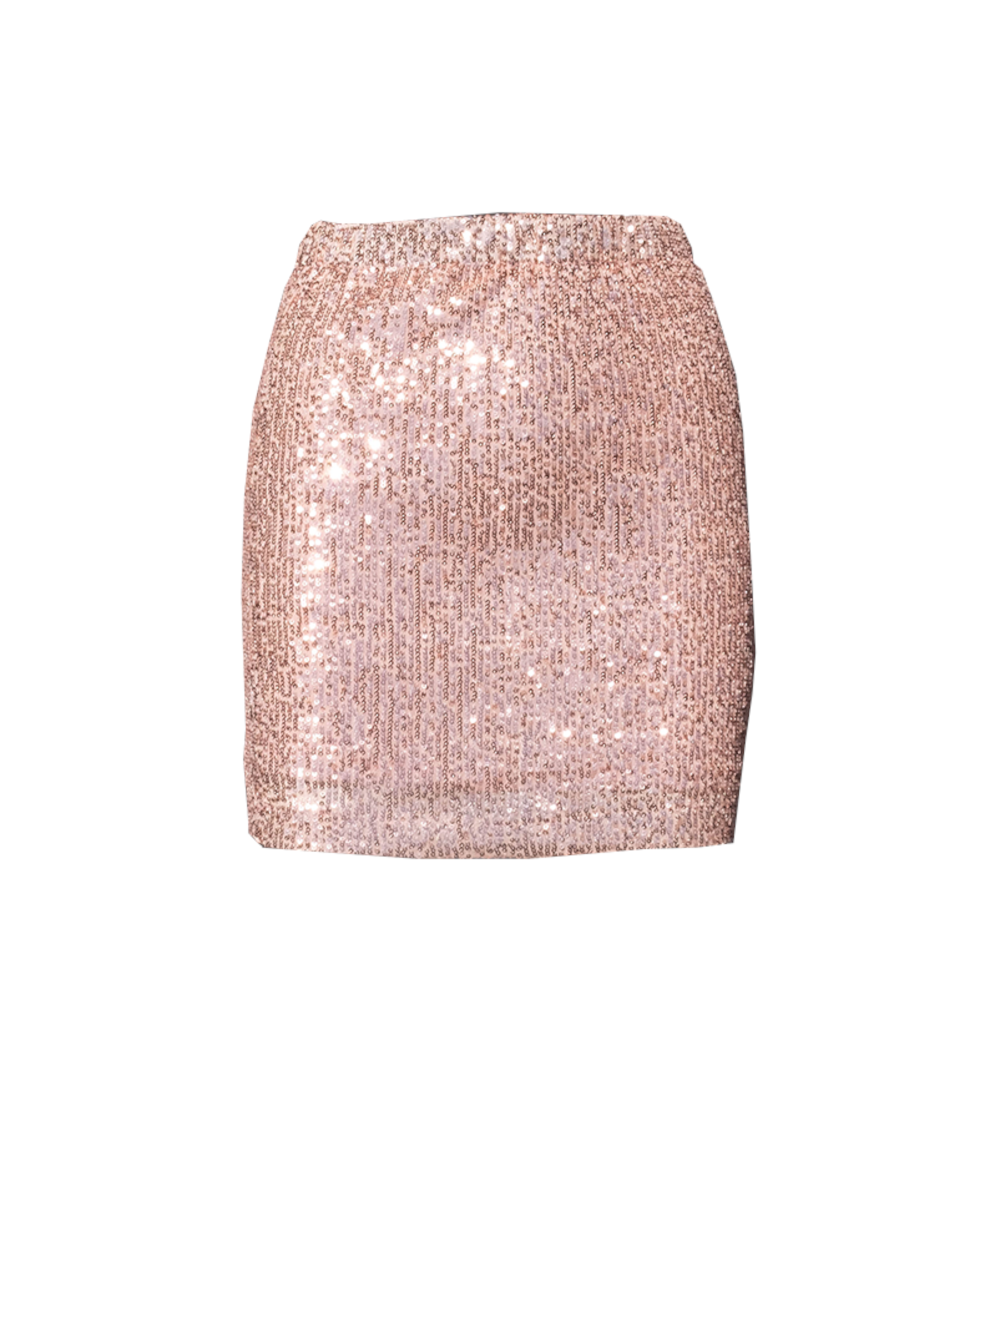 LINDA - short pink sequin skirt